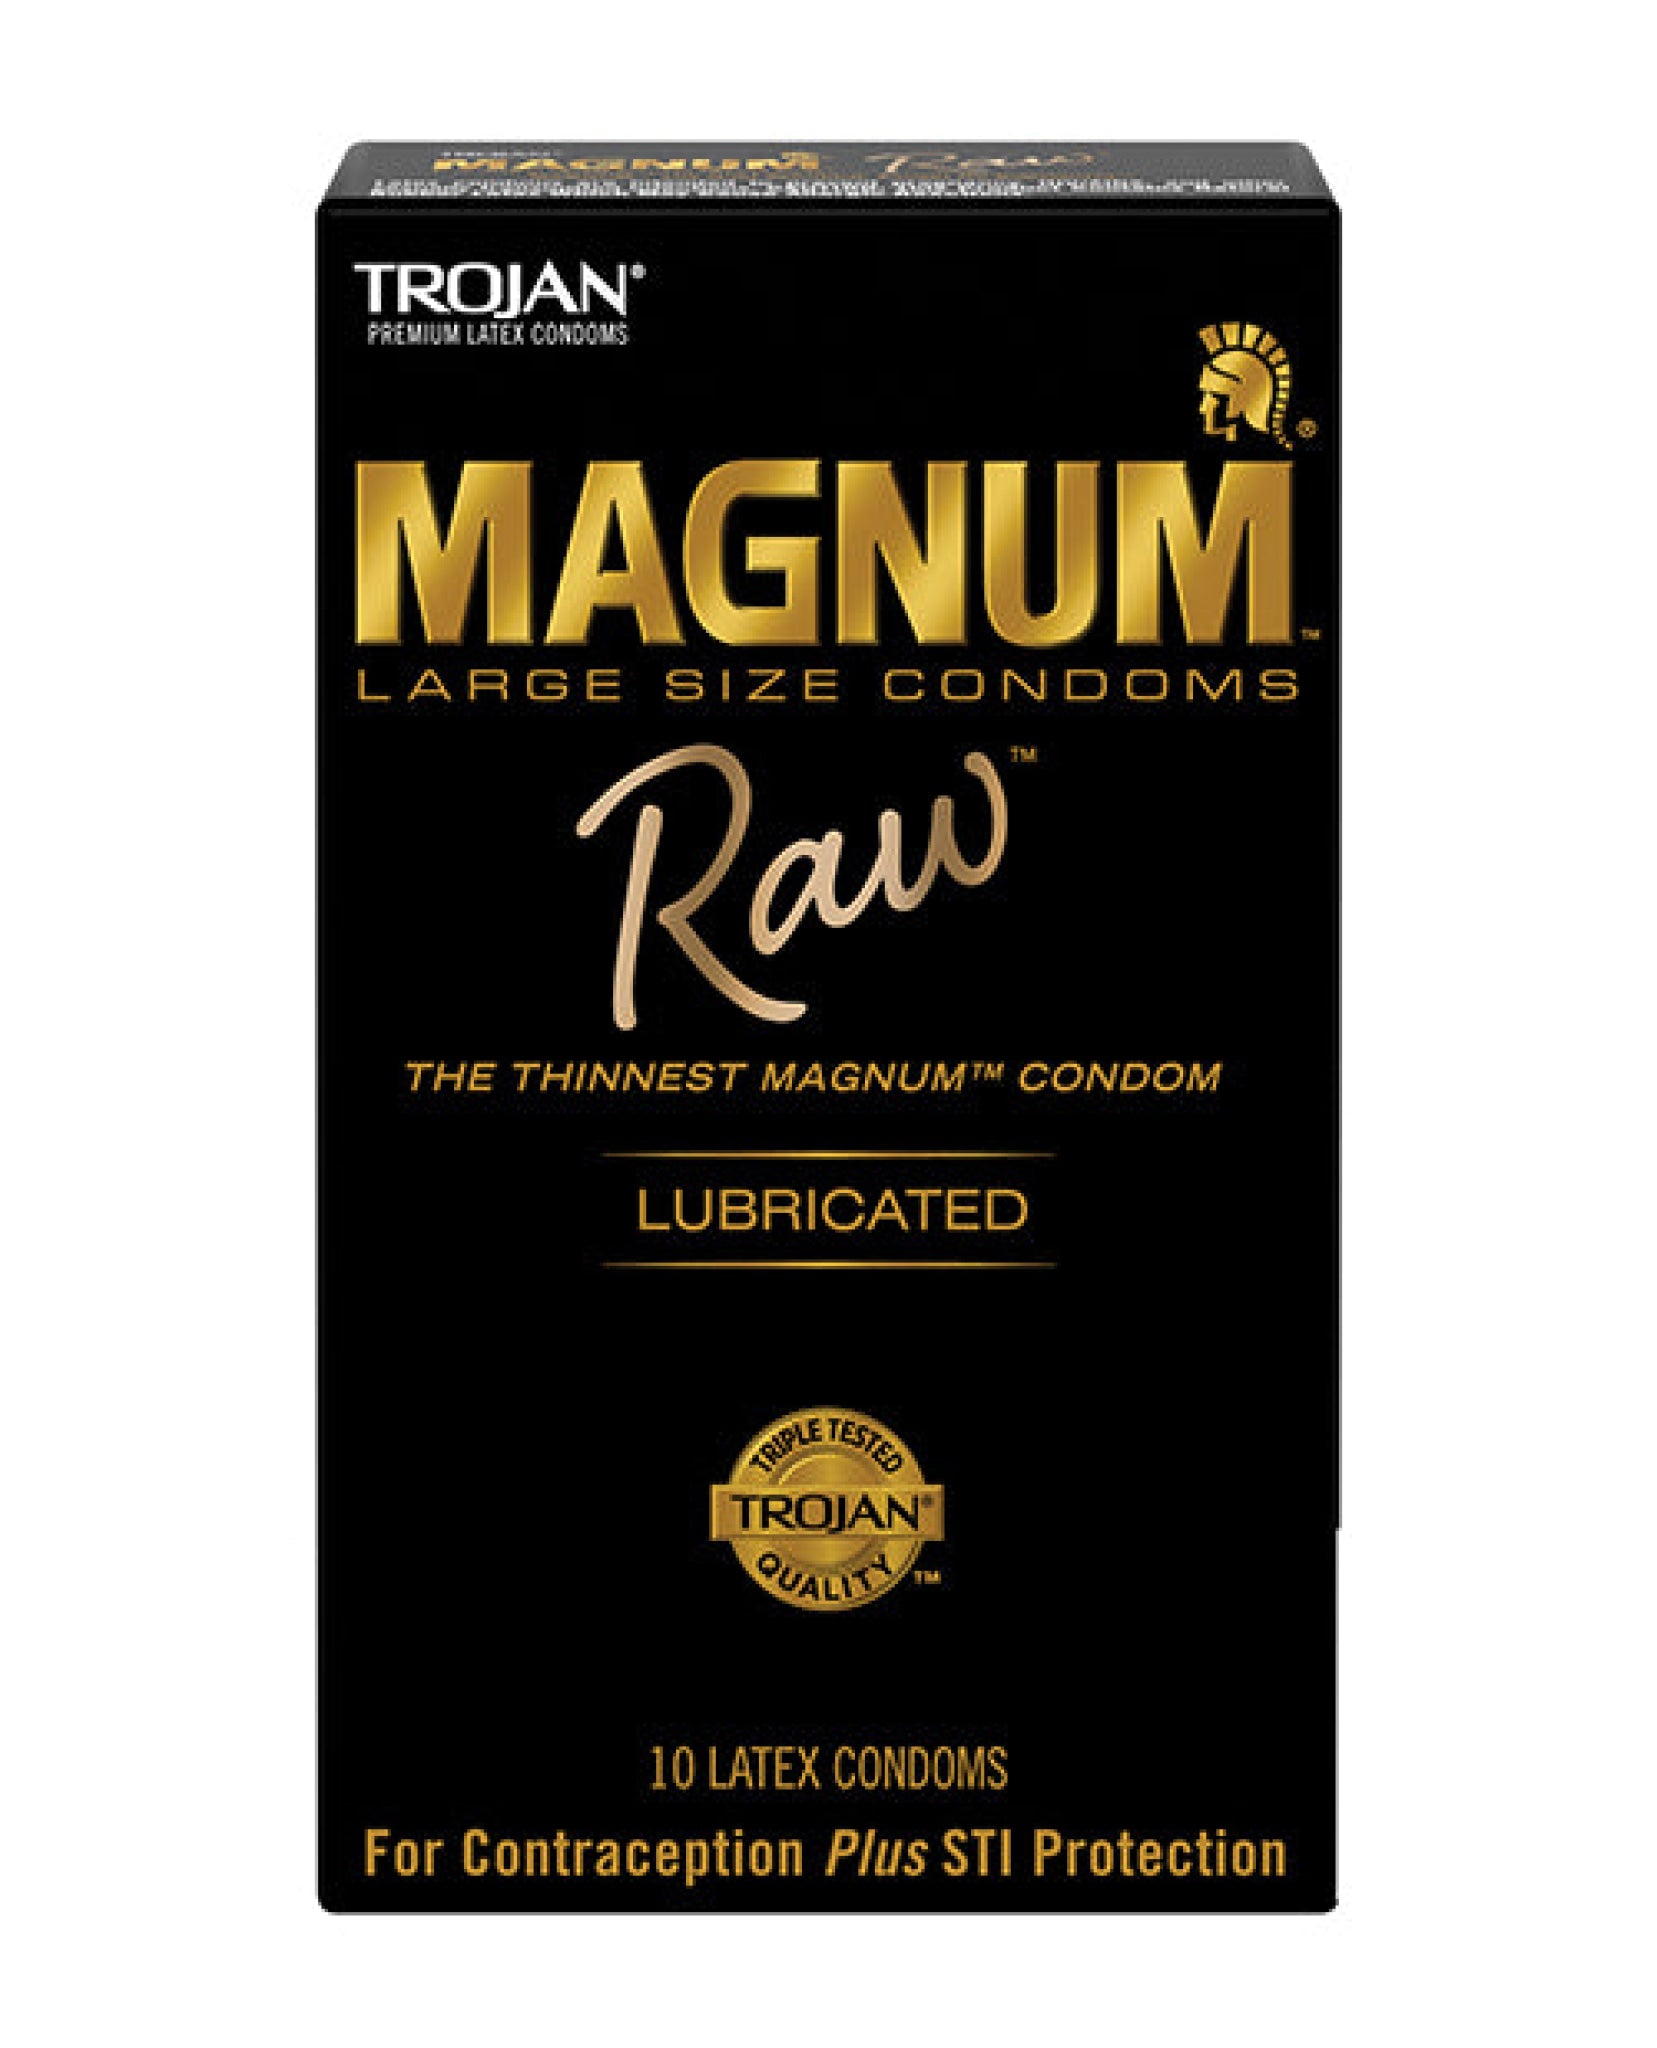 Trojan Magnum Raw Condoms - Pack of 10 Paradise Marketing